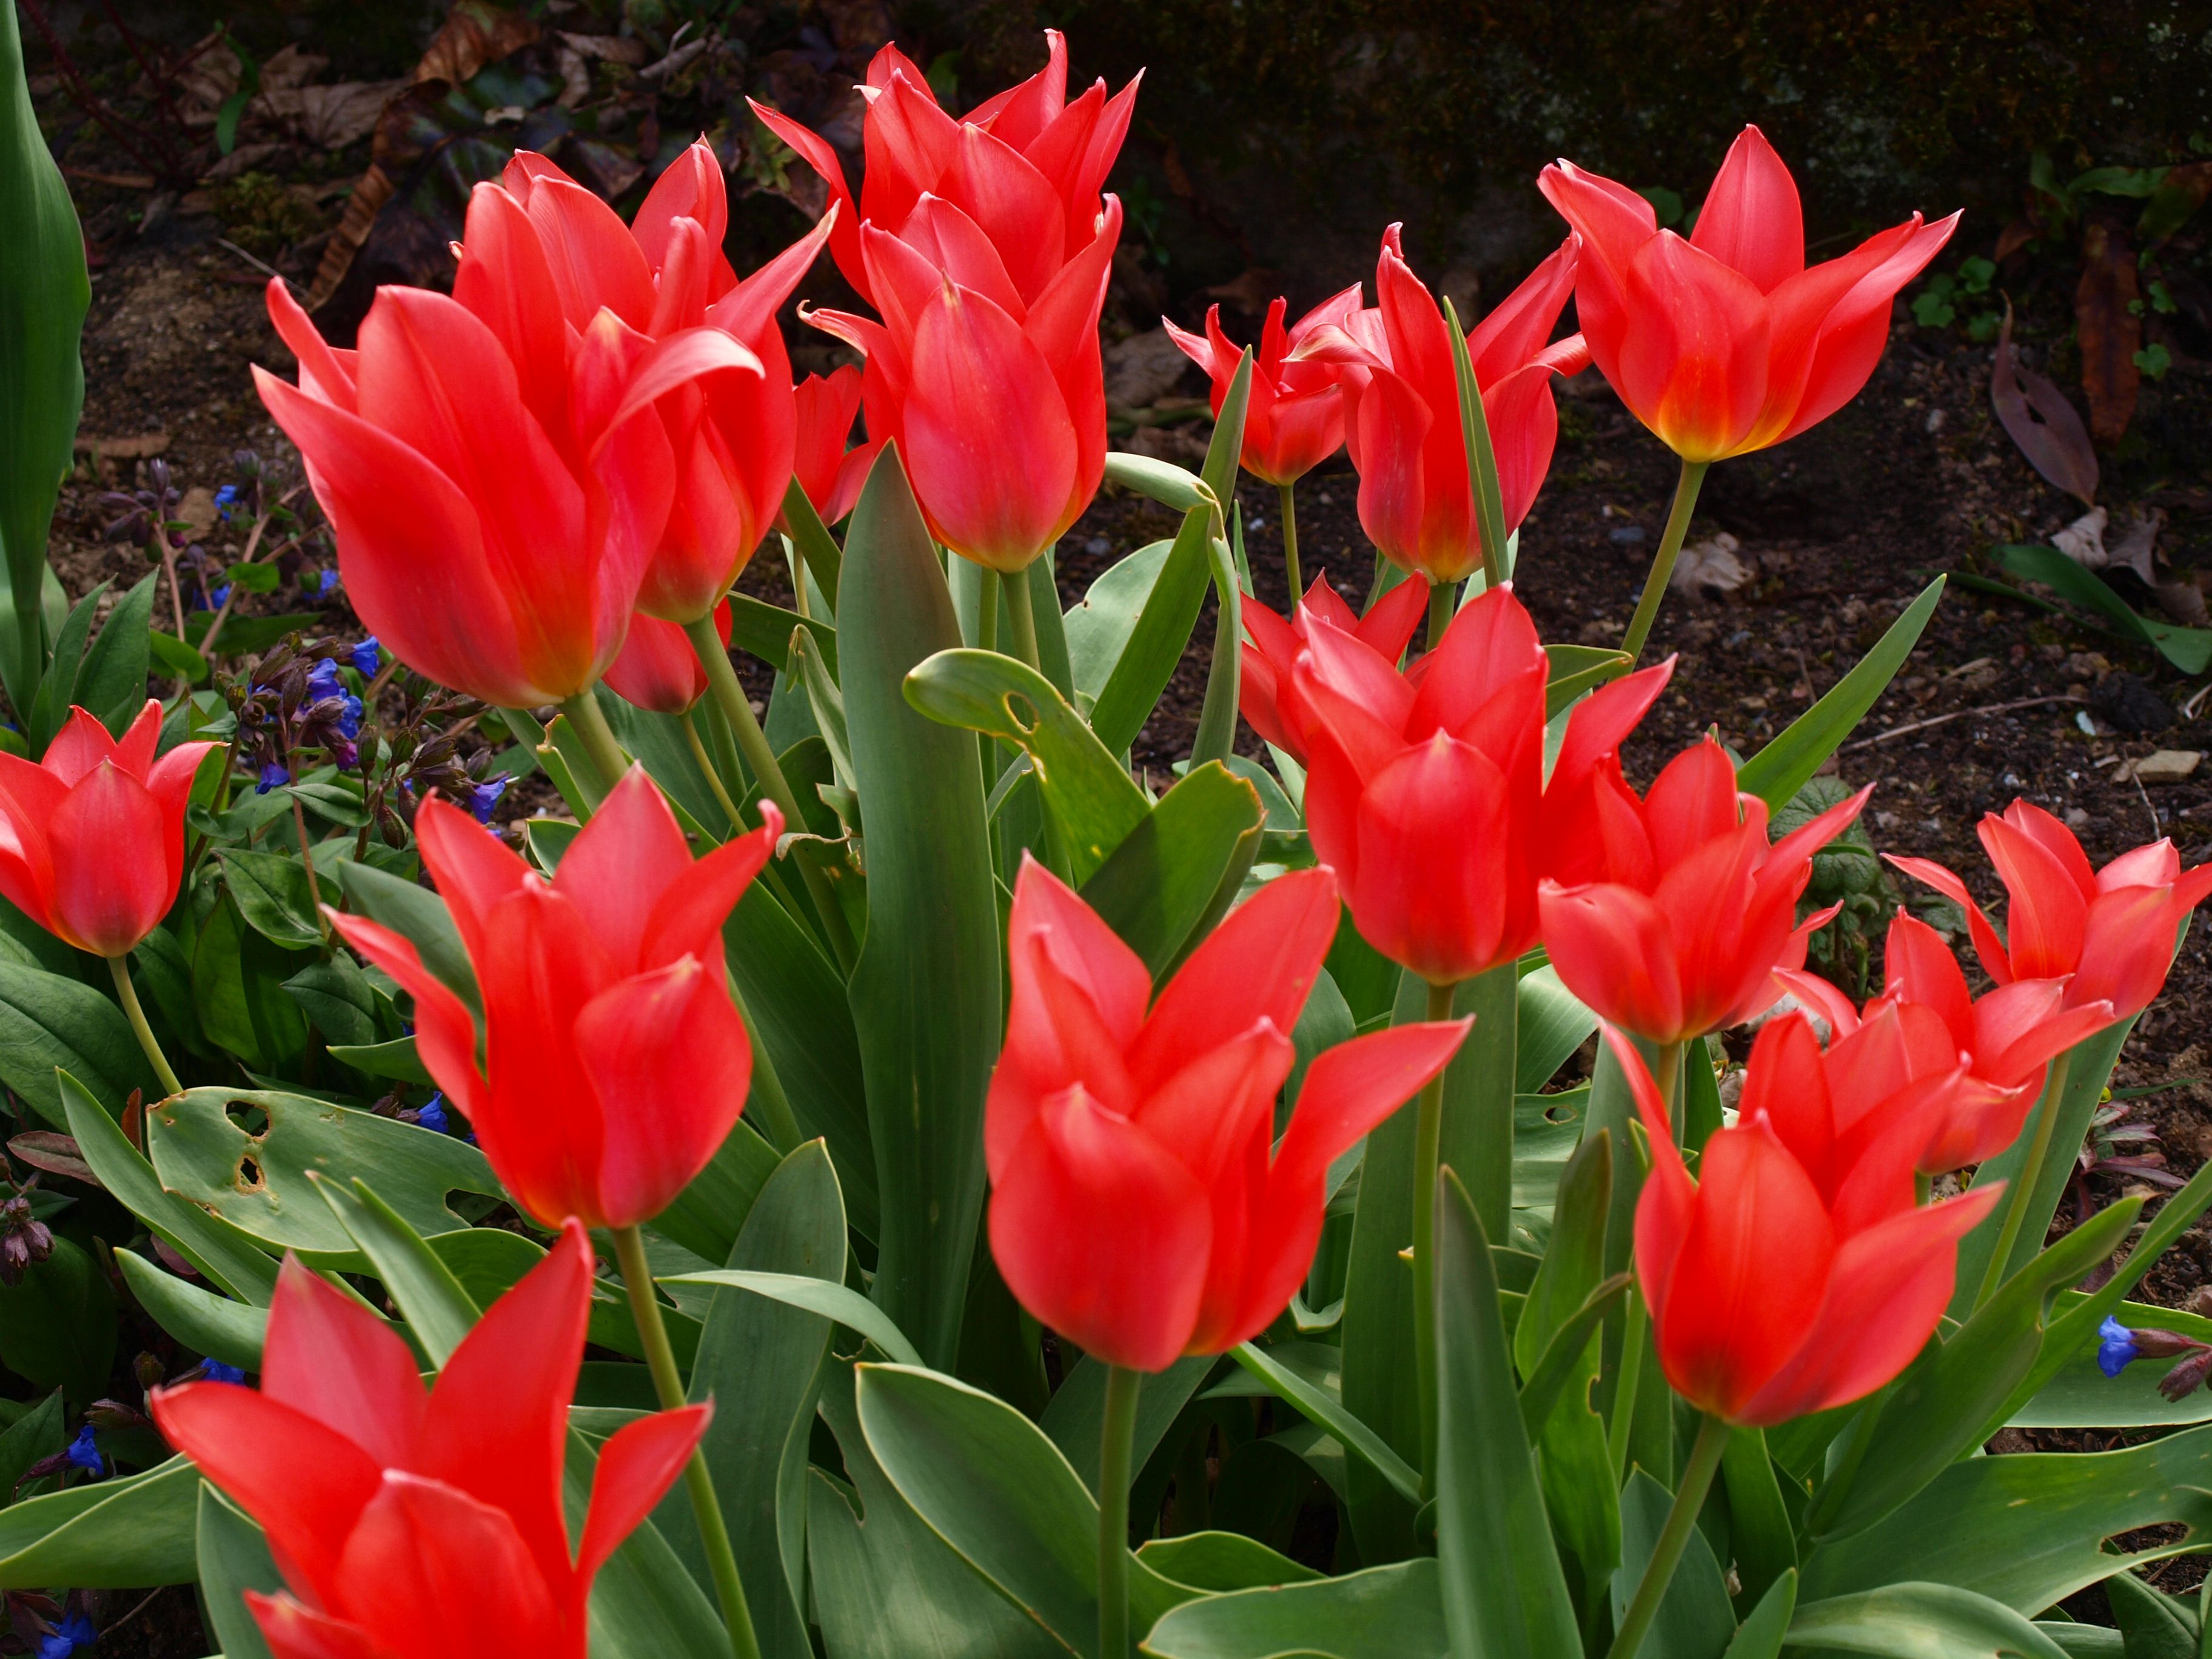 Bright & Fiery tulips at Trerice Manor | Tulips 2 | Pinterest ...